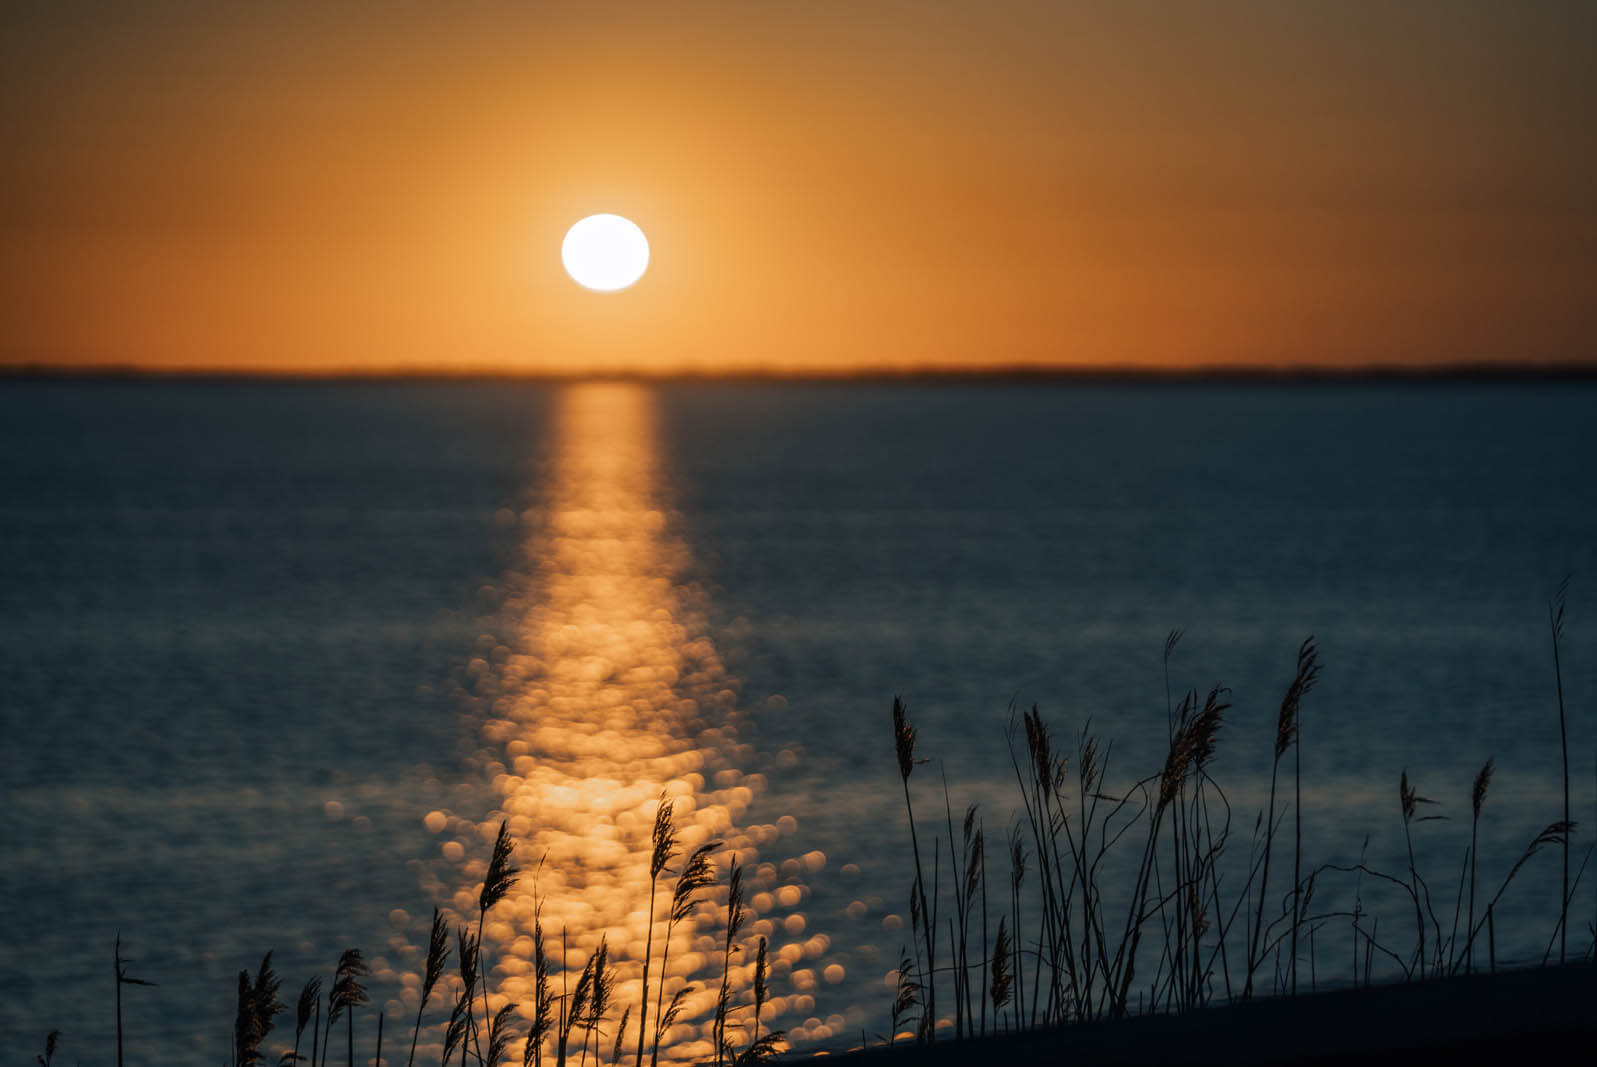 sunset view from Montauket in the Hamptons New York